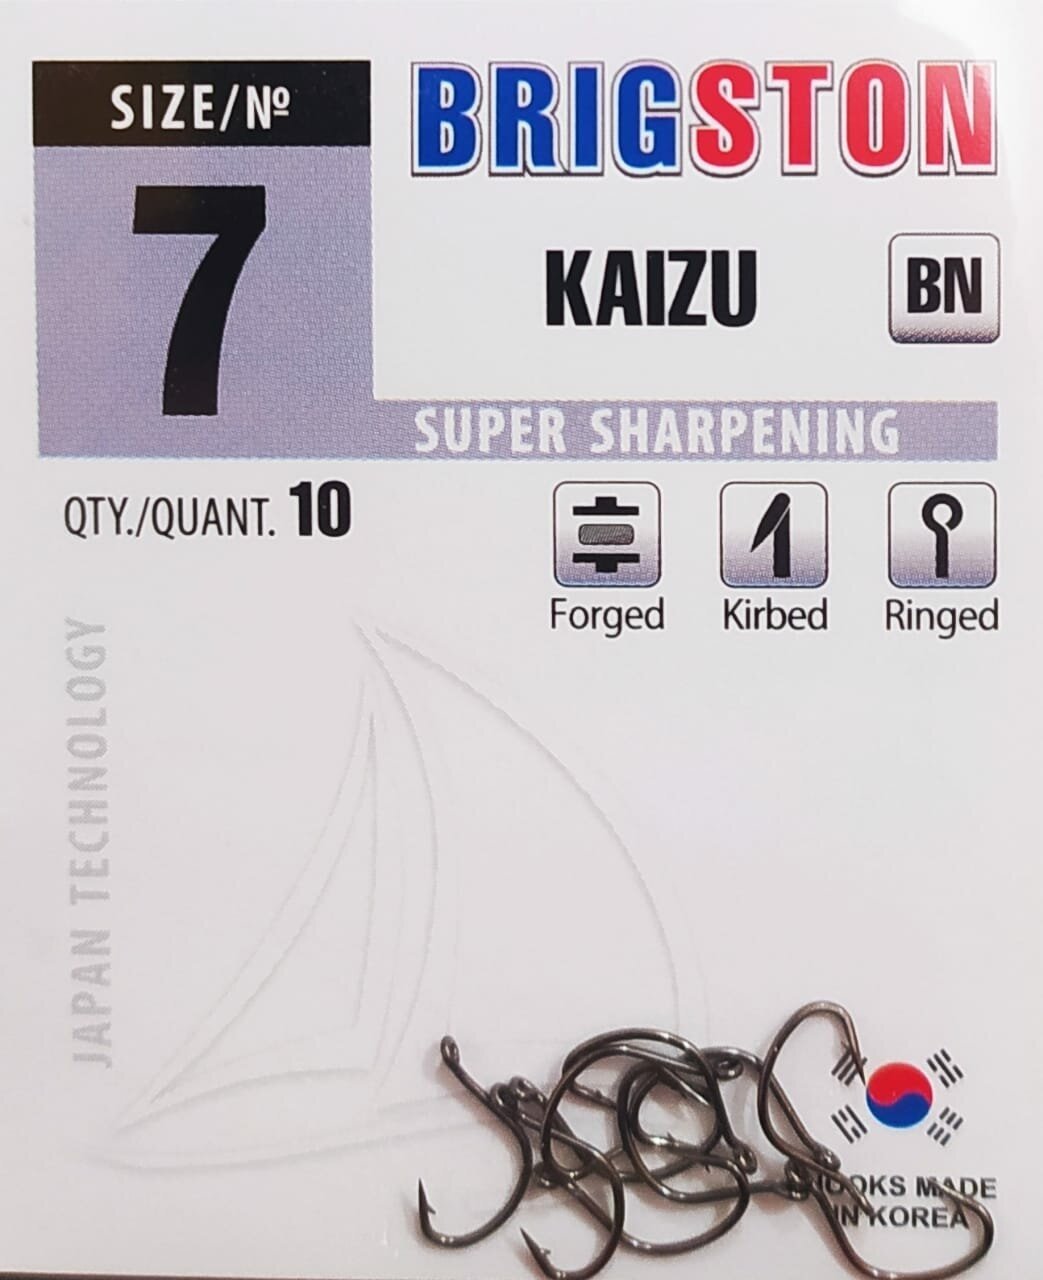 Рыболовные крючки Brigston Kaizu (BN) №7 упаковка 10 штук